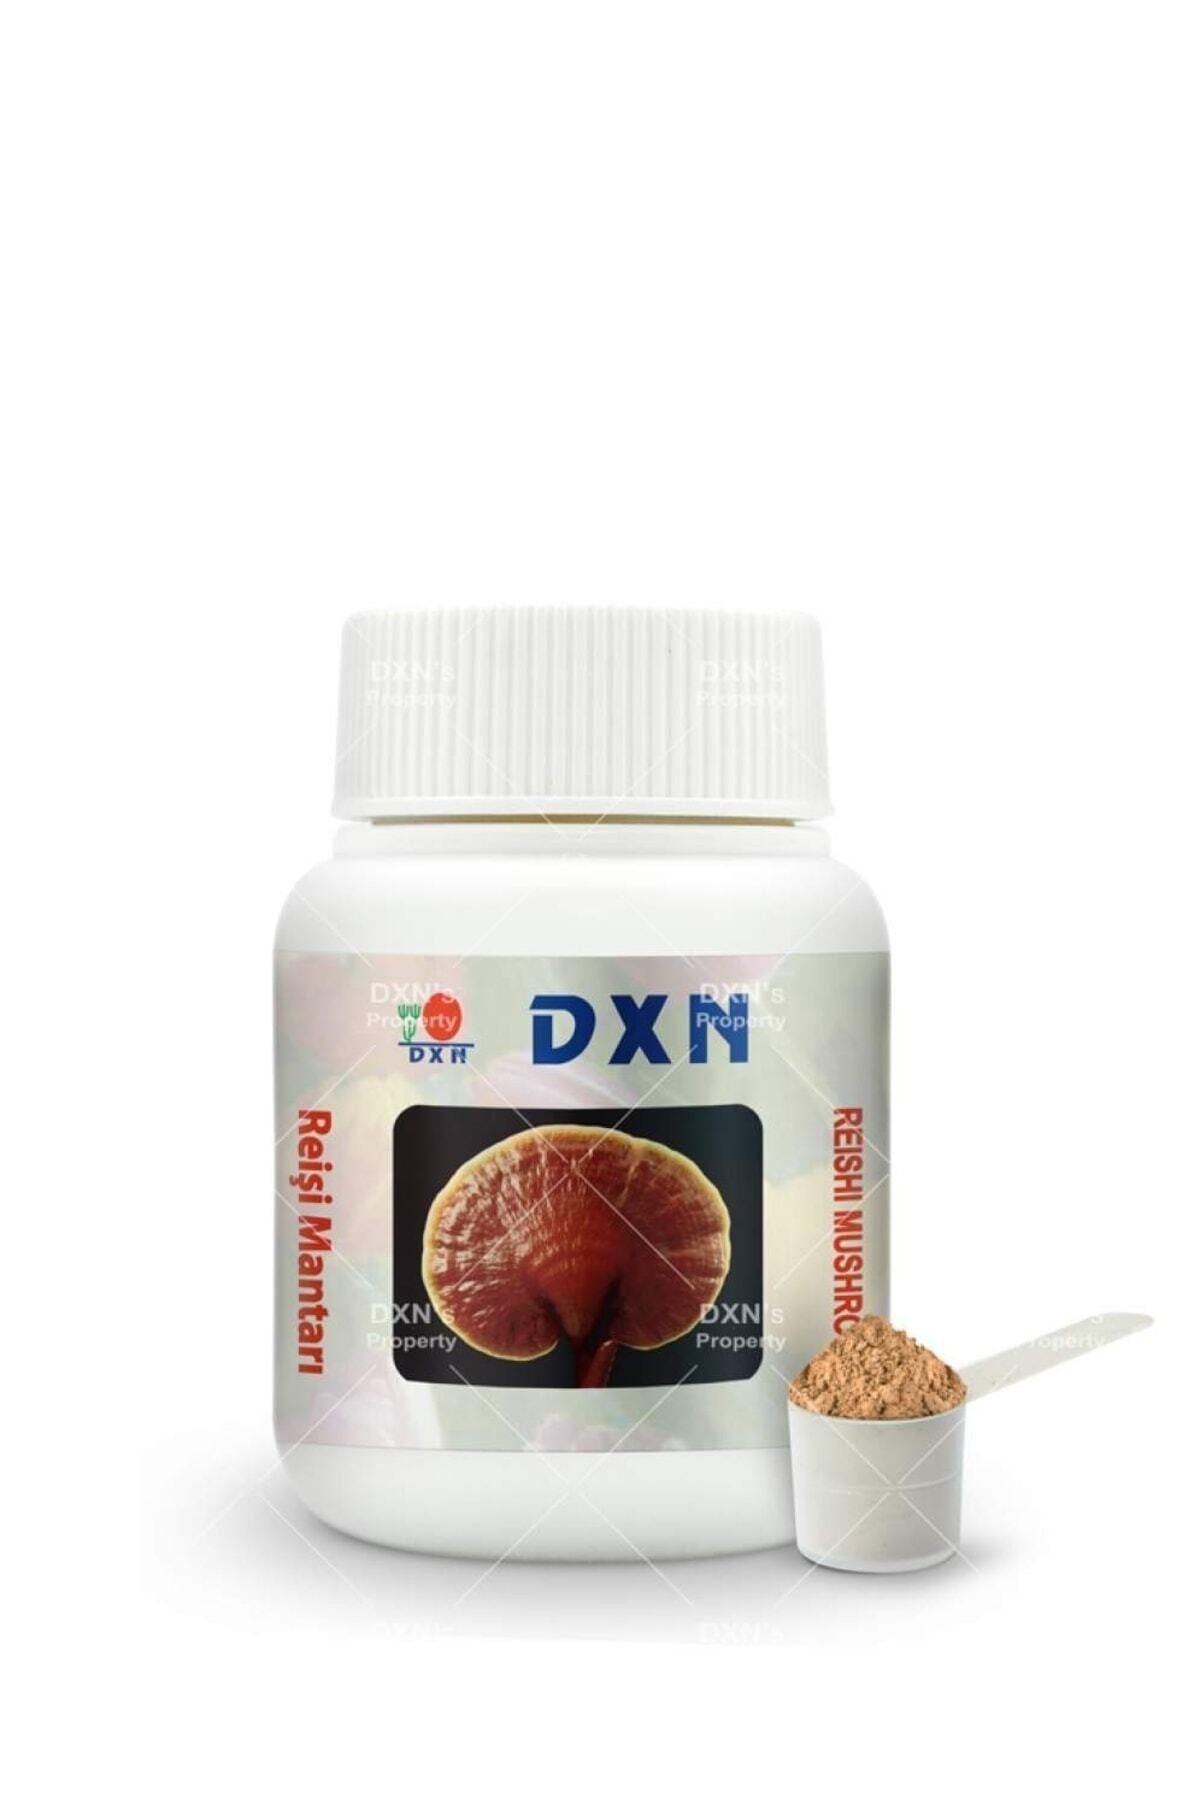 DXN Reishi Mushroom Powder 70g